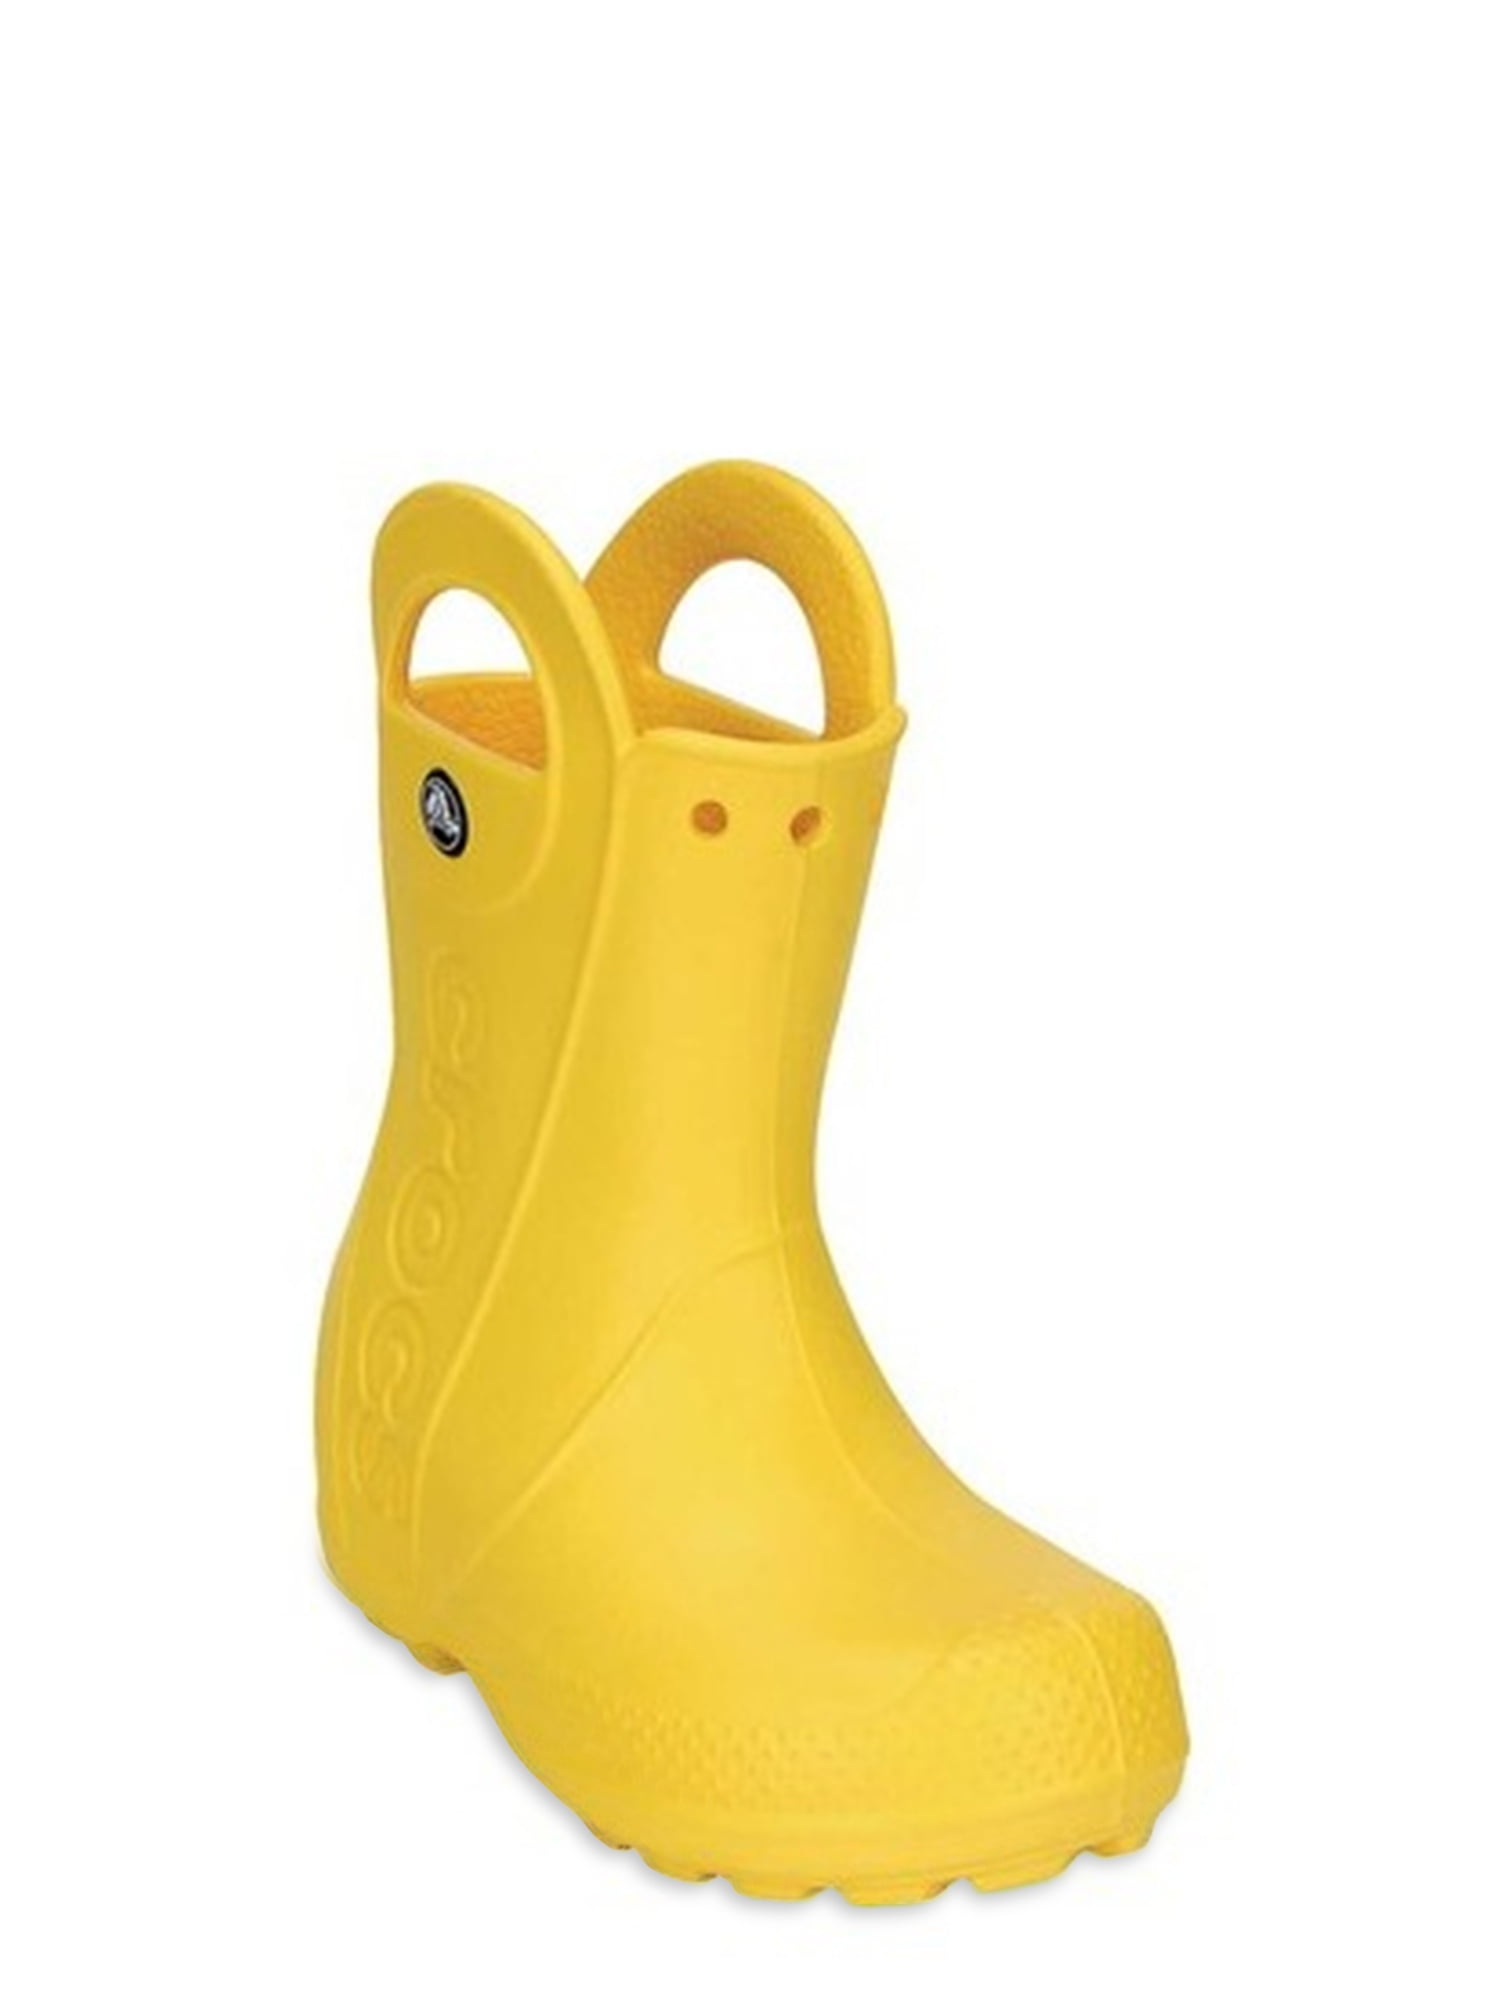 CROCS Handle It Kids Roomy Fit Yellow Rain Boot Size 9 NEW AUTHENTIC 